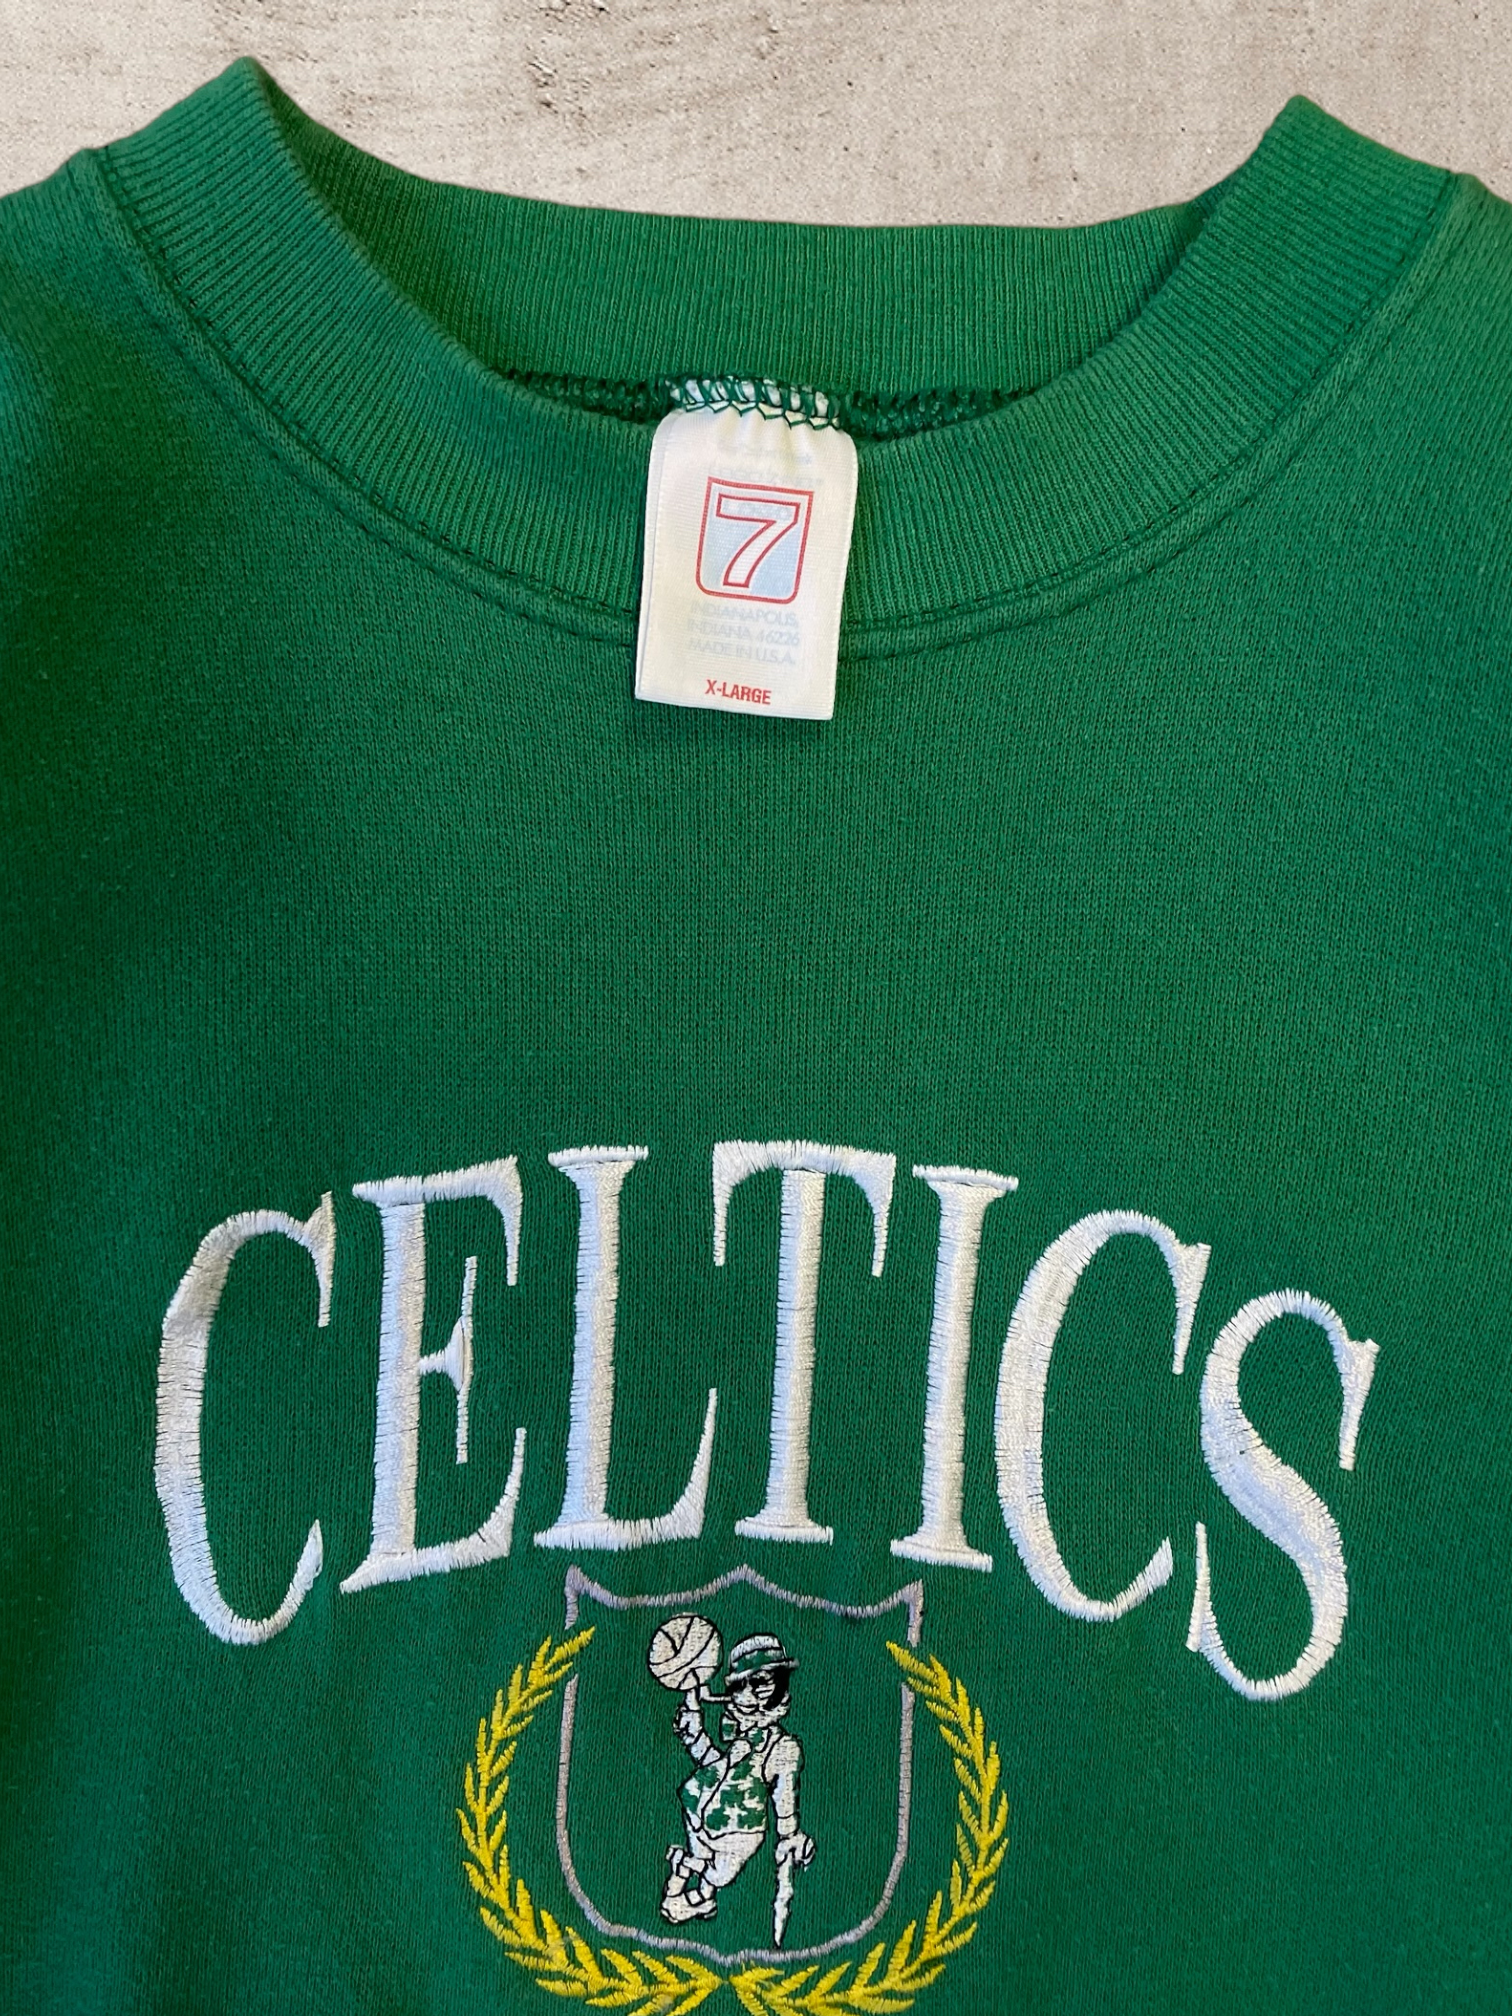 90s Boston Celtics Crewneck - Large